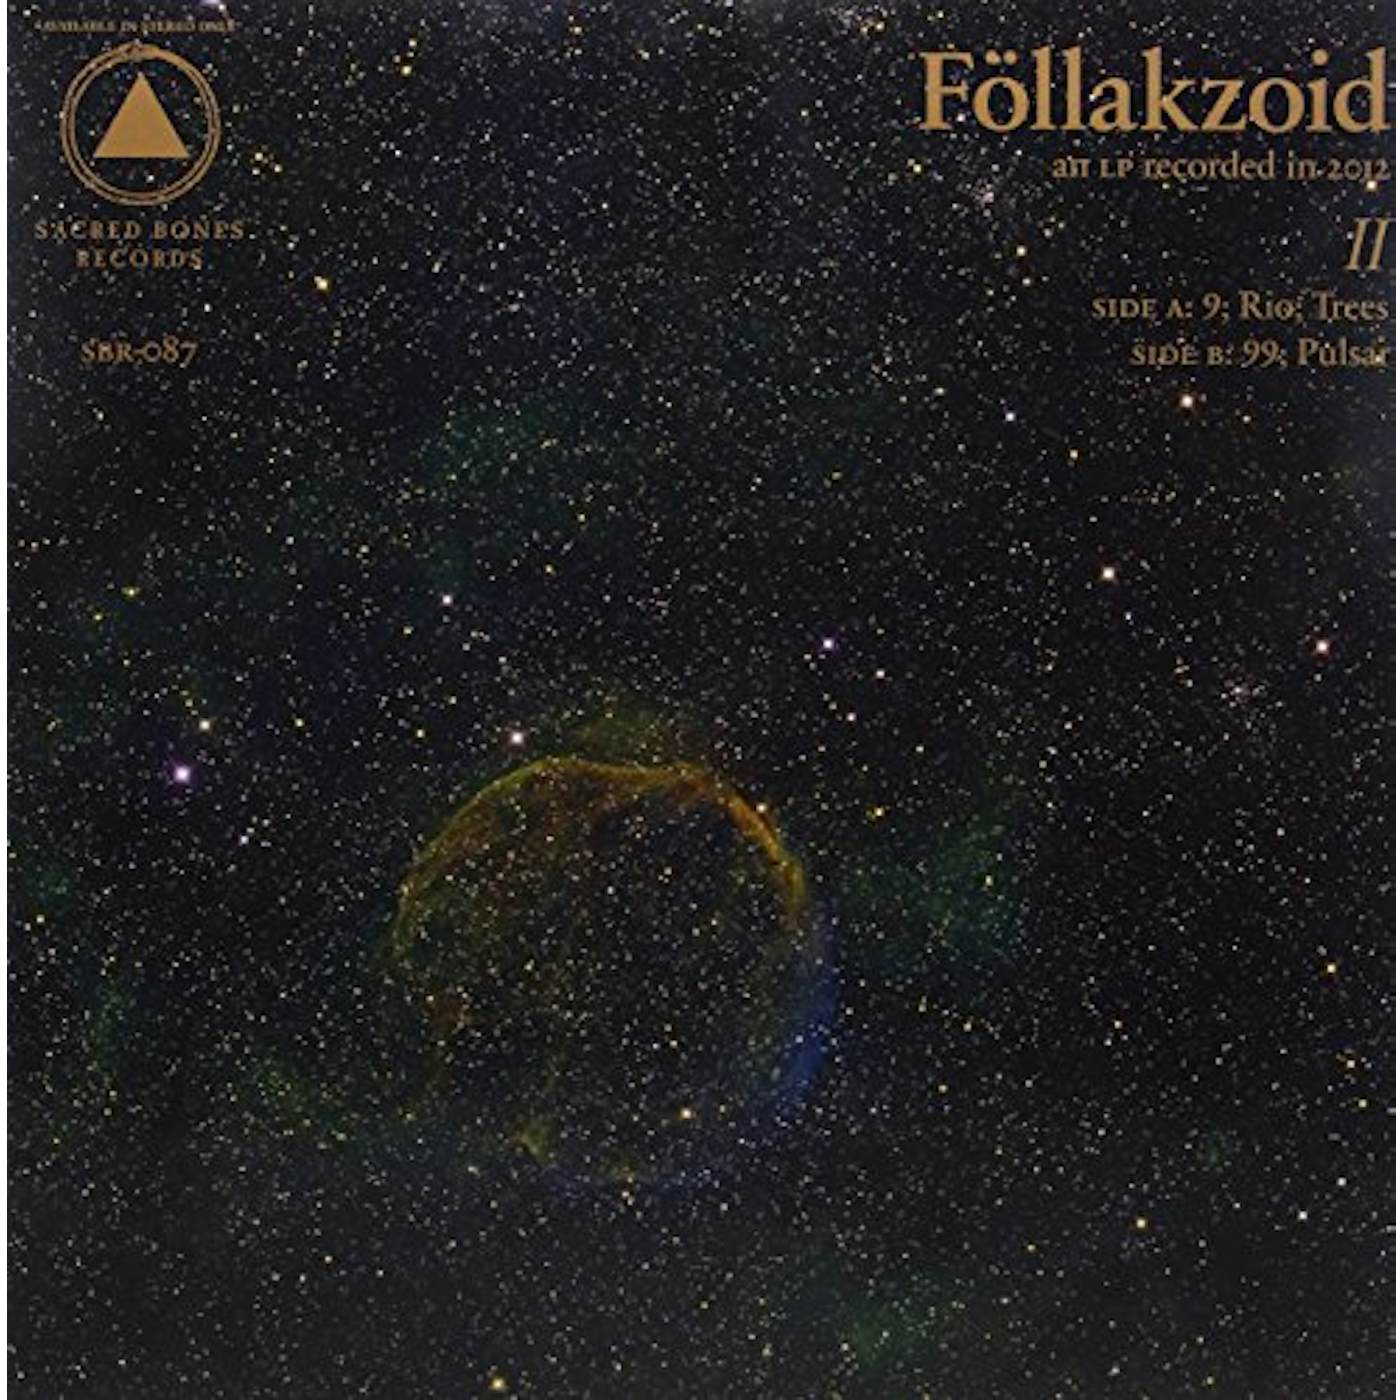 Föllakzoid II (SACRED BONES 10TH ANNIVERSARY EDITION) Vinyl Record